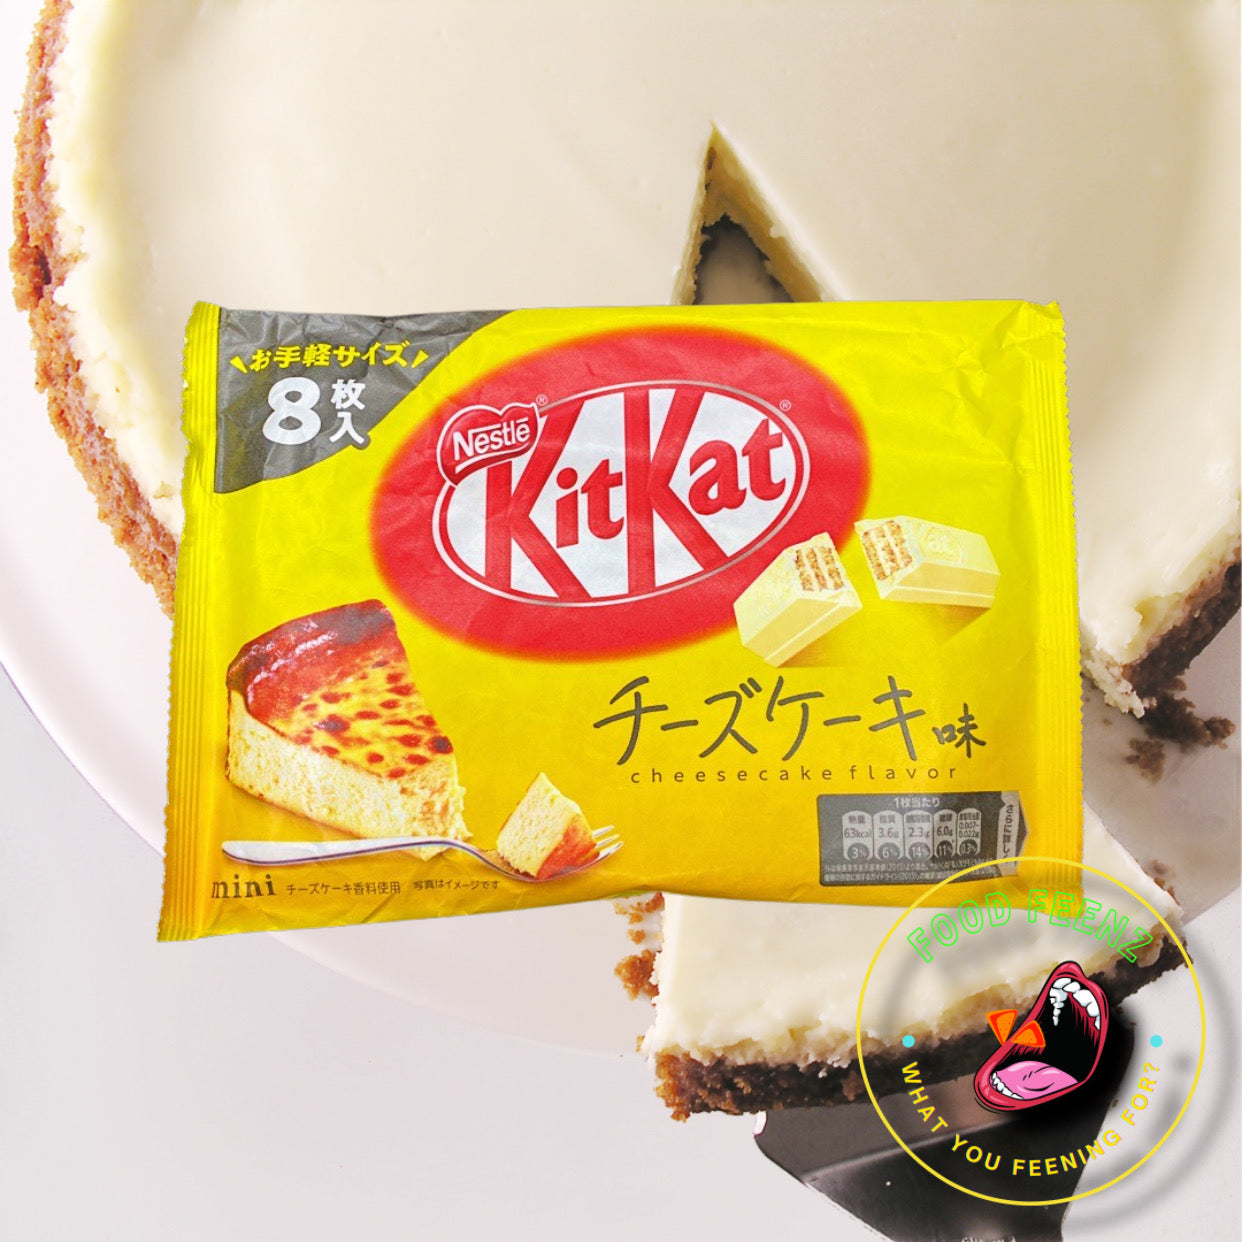 Kit Kat Cheesecake Flavor (Japan)